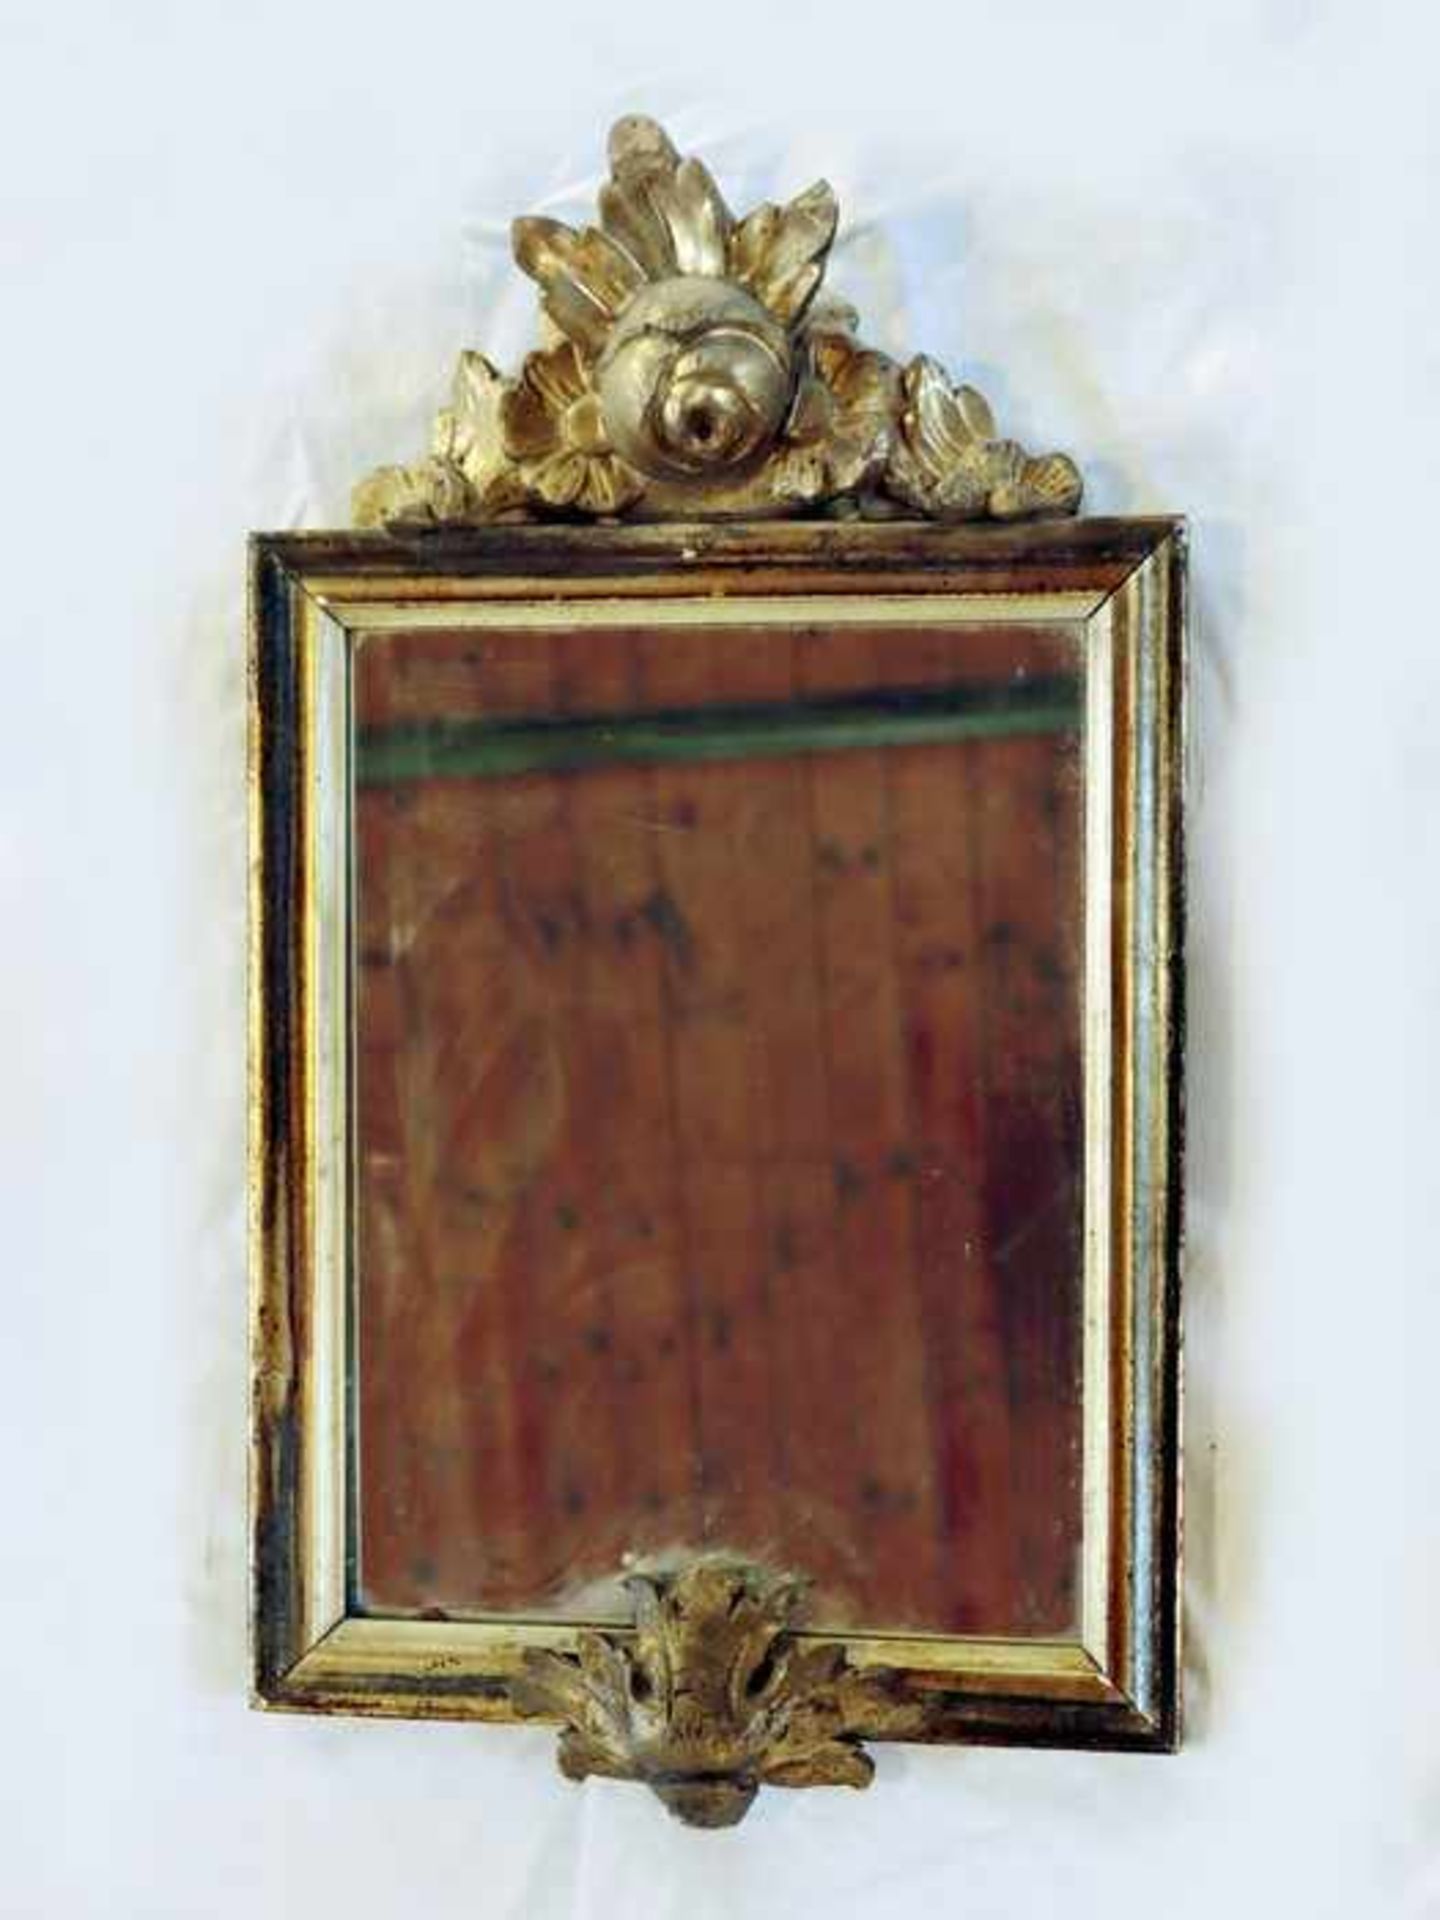 Barock - Wandspiegel18./19.Jh., Holz geschnitzt, gefasst, hochrechteckiger Rahmen m. aufgesetzter